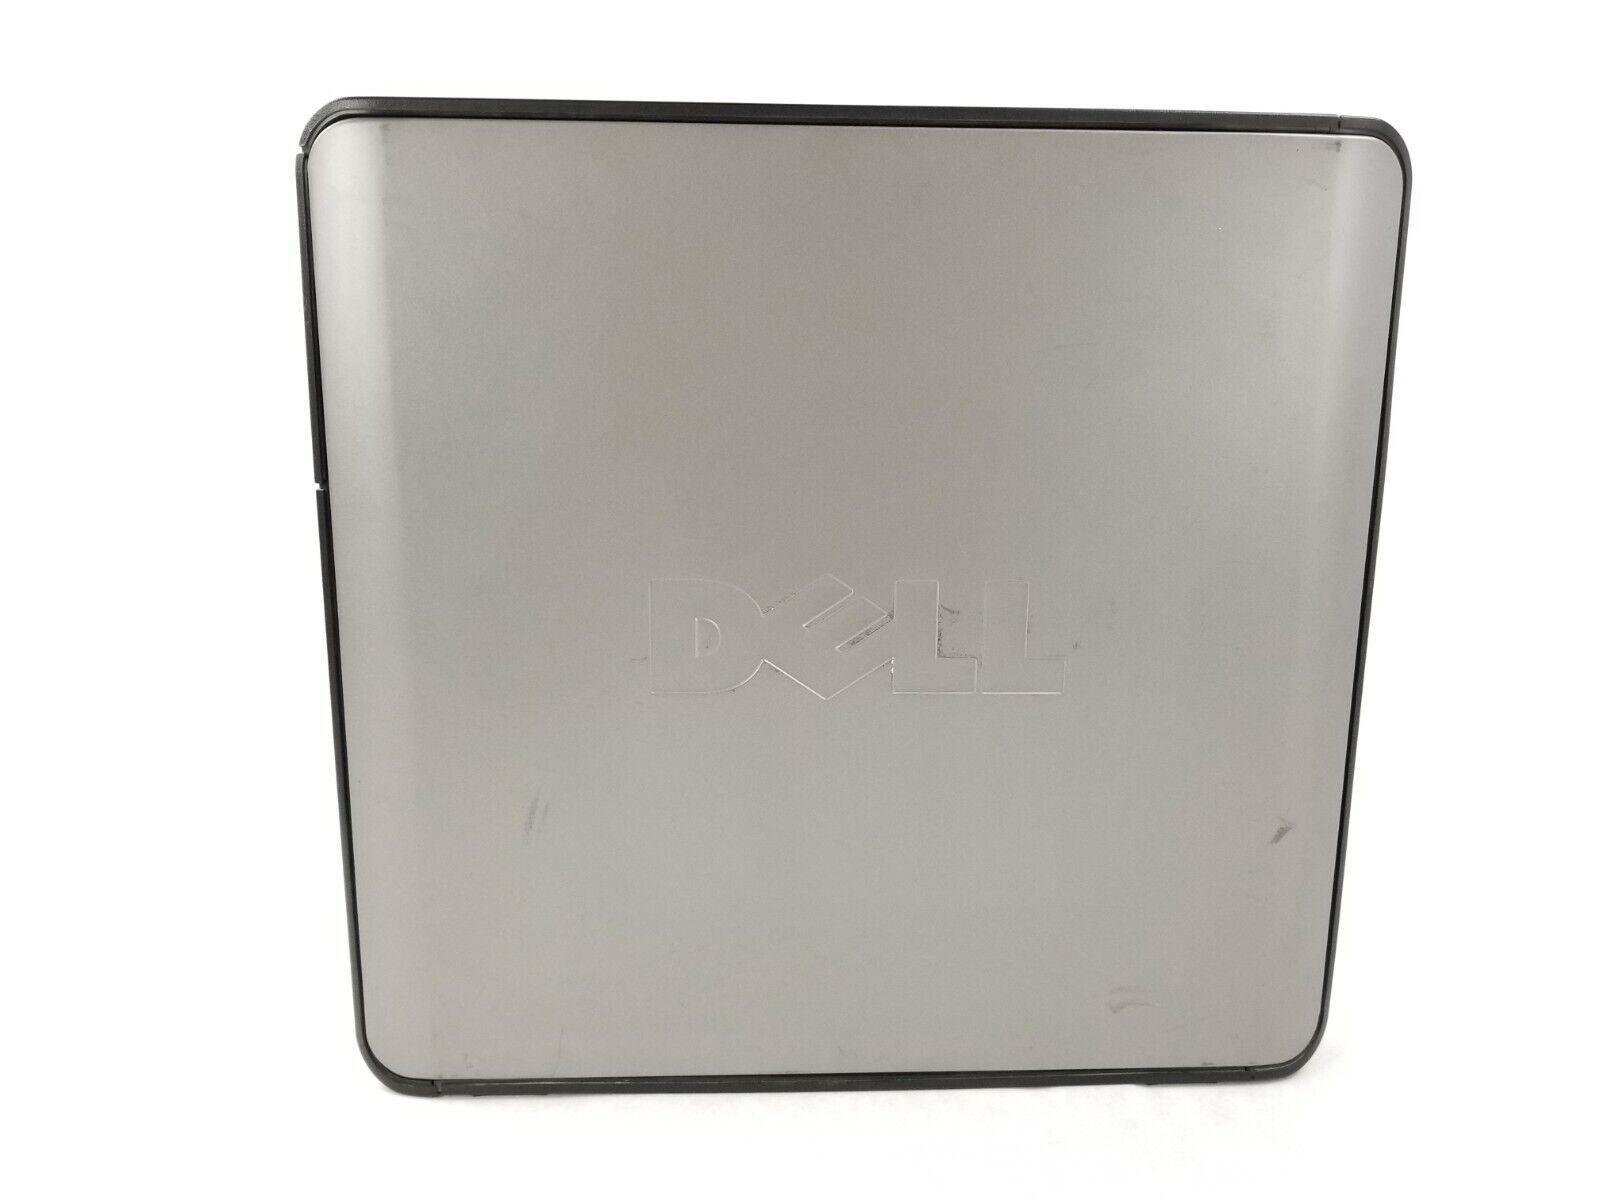 Dell Optiplex 360 MT Intel Pentium E5400 2.70GHz 2GB RAM CD-RW